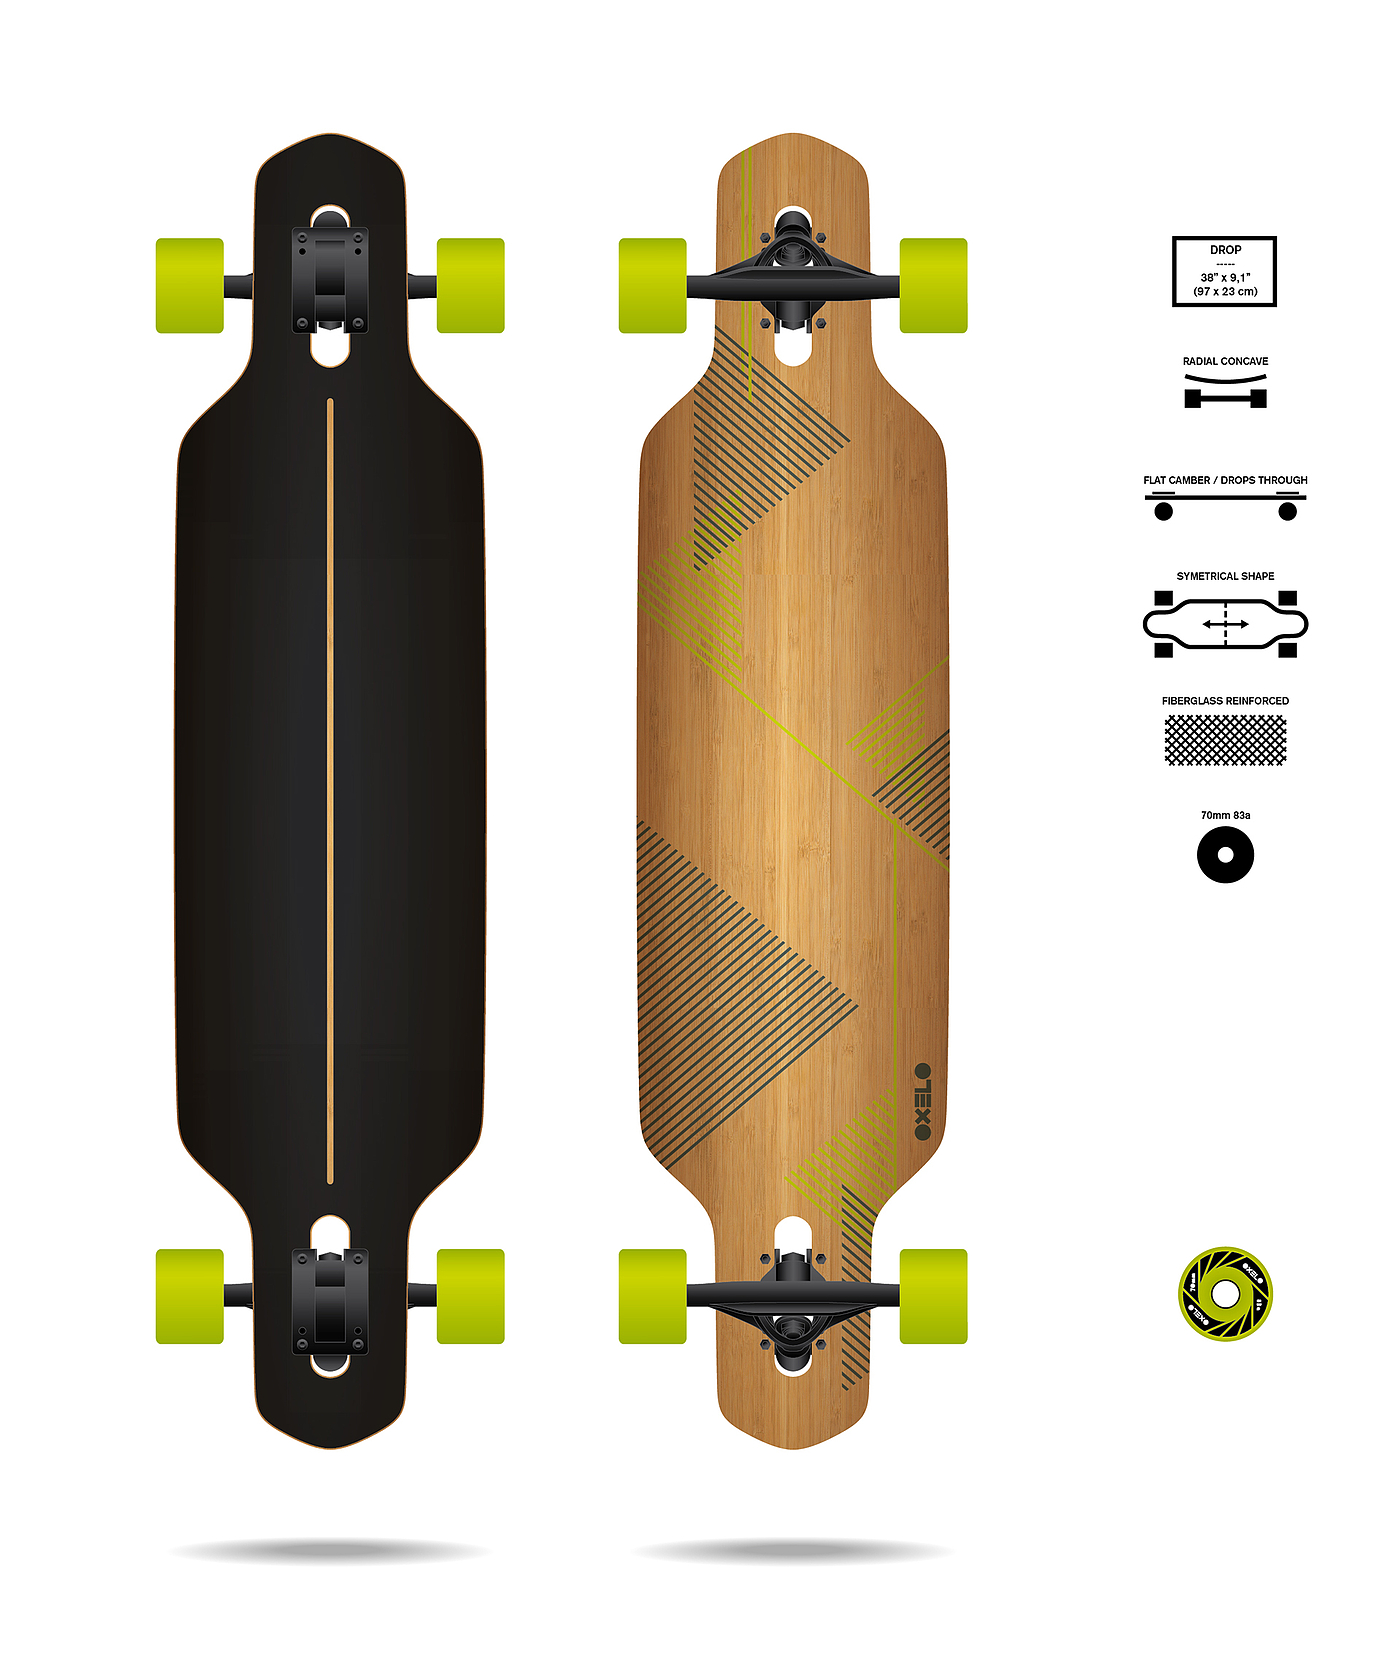 OXELO，滑板，木质，产品设计，